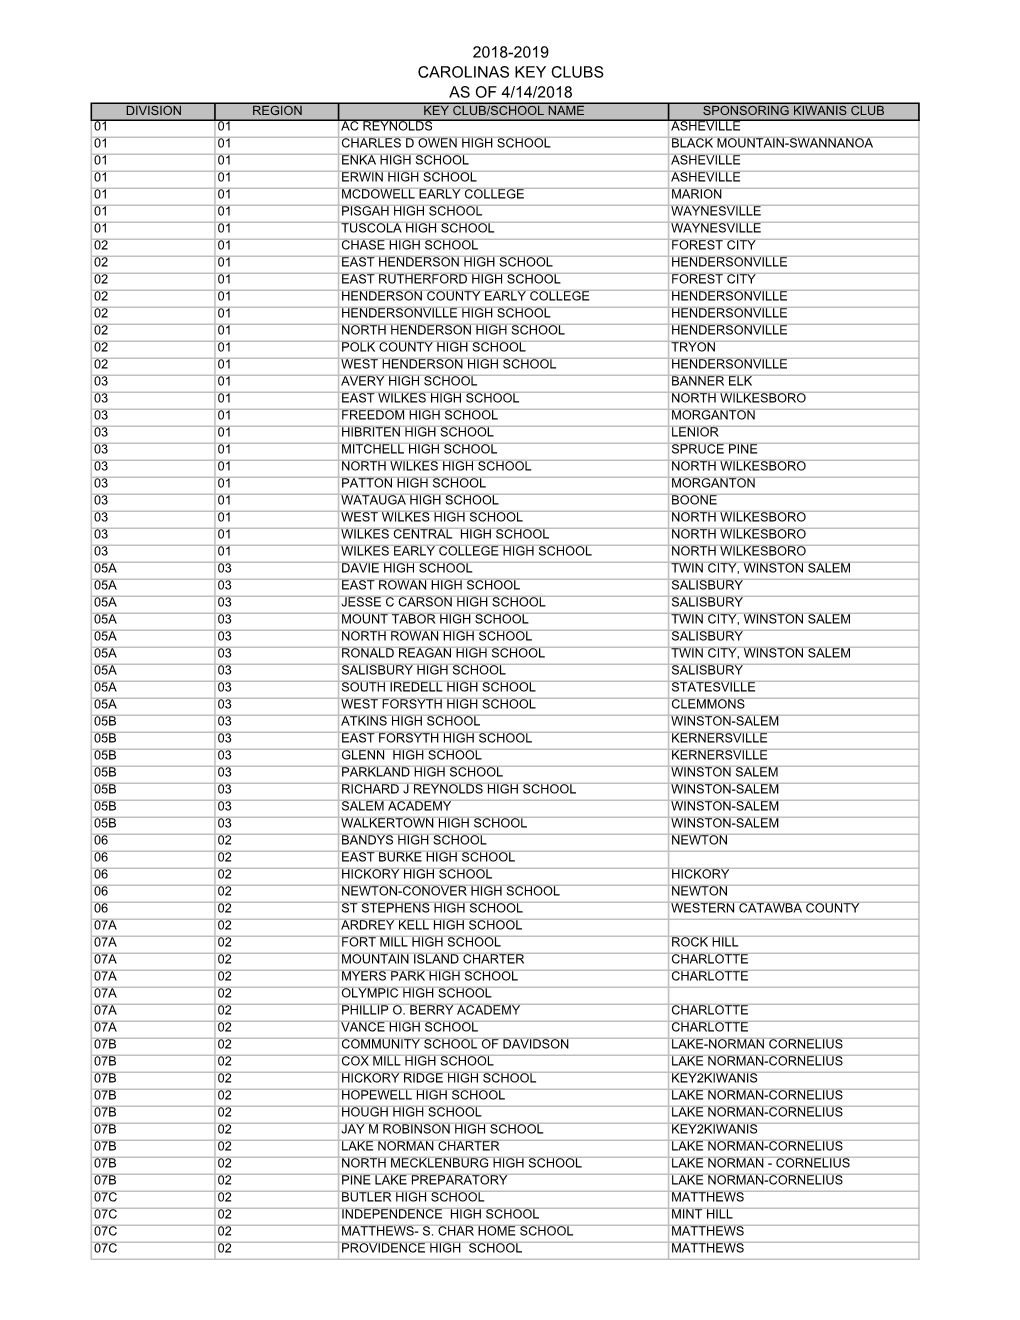 CAROLINAS KEY CLUBS As of 4 14 2018